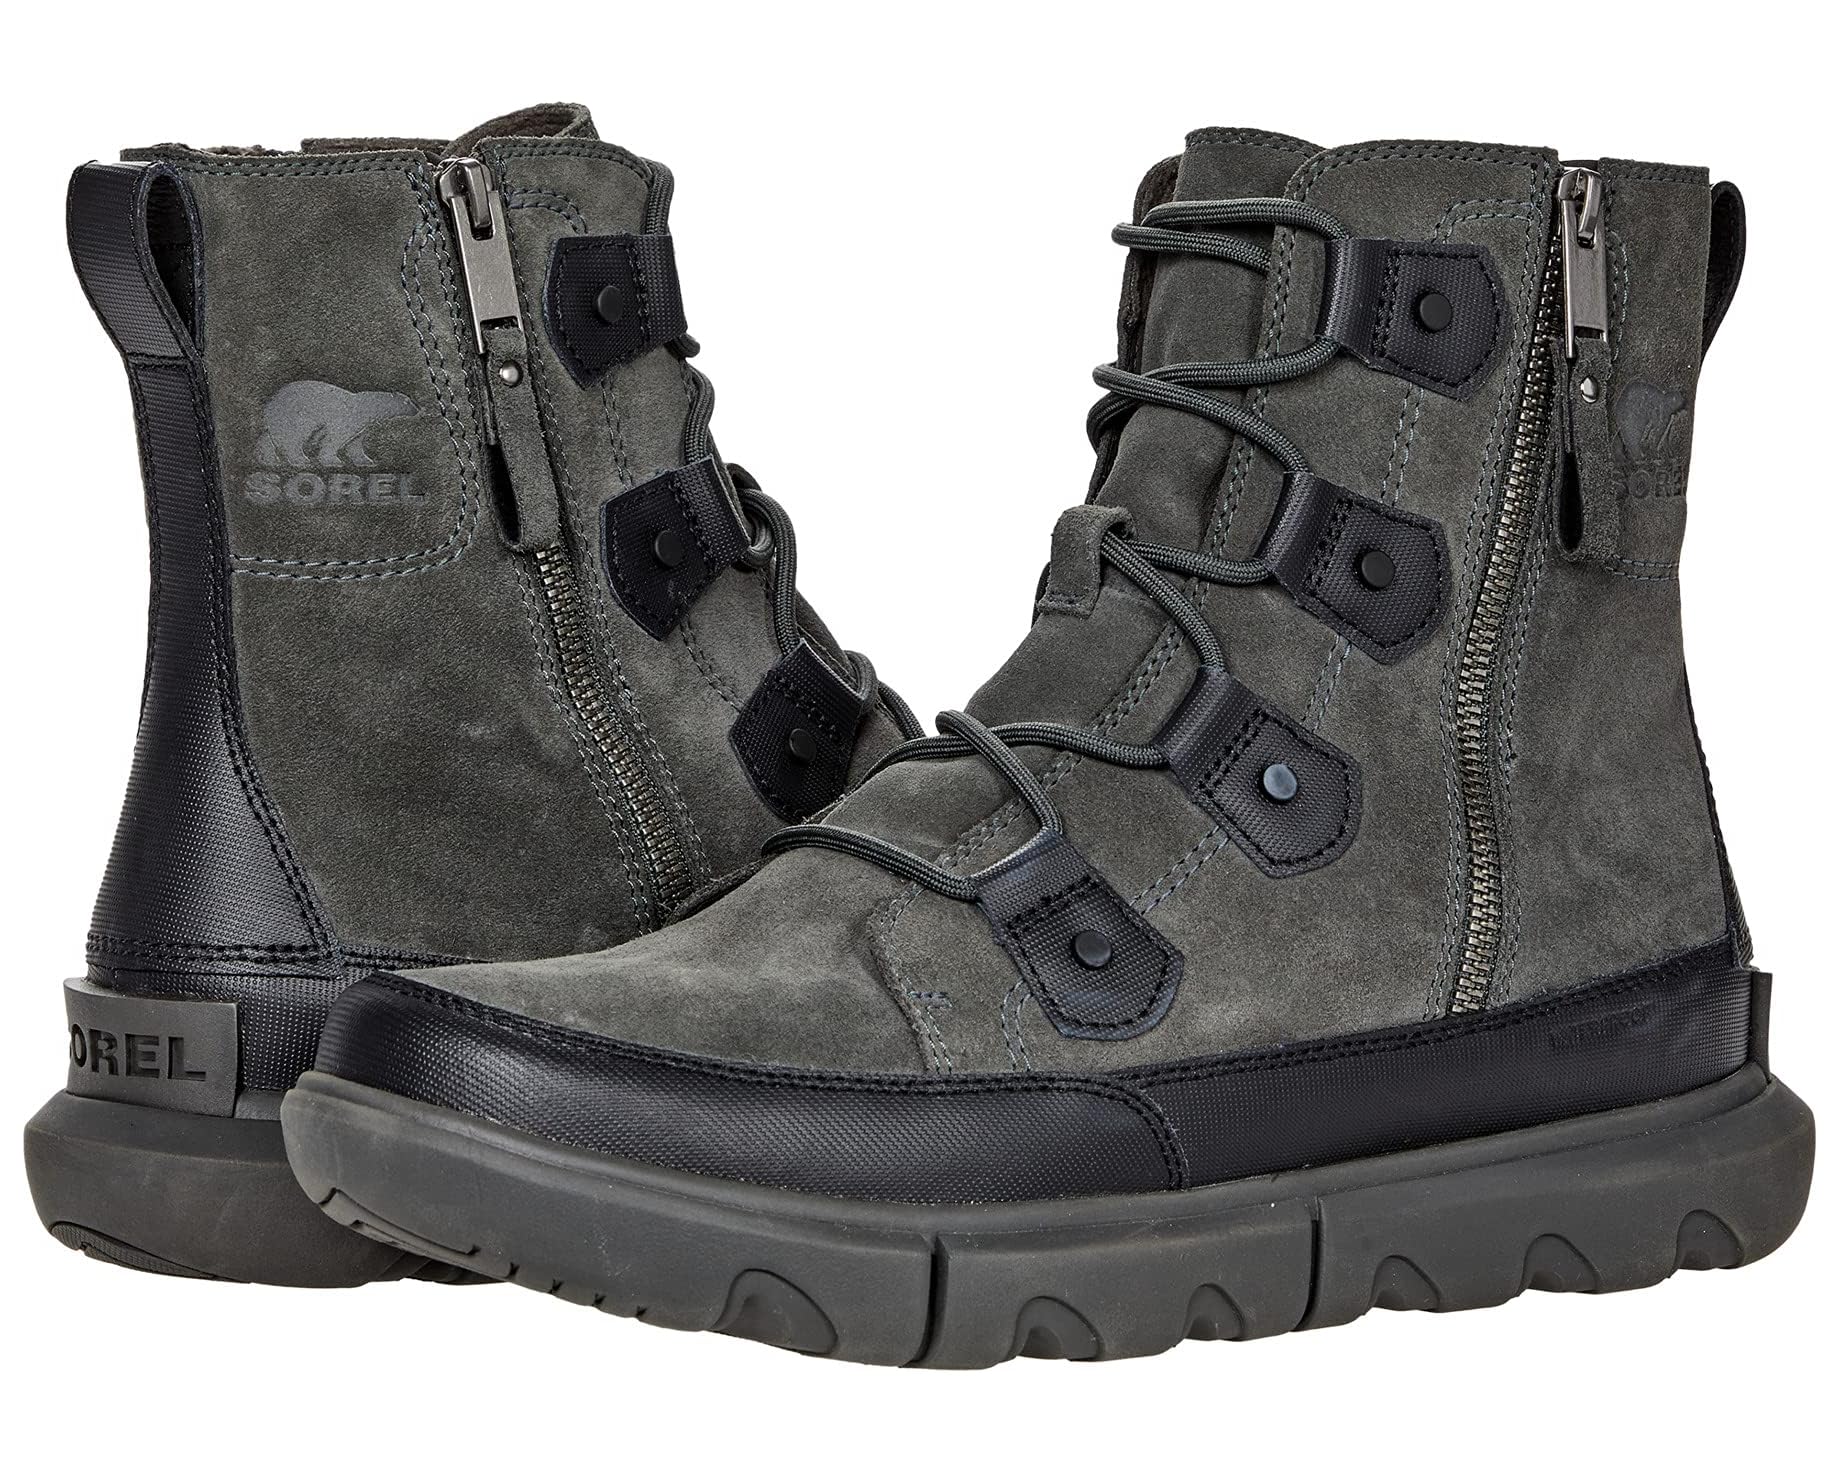 Sorel Men's Explorer Dual Zip Waterproof Boots (black, size 10, 10.5, 11.5 and 12) $37.50 + Free Shipping